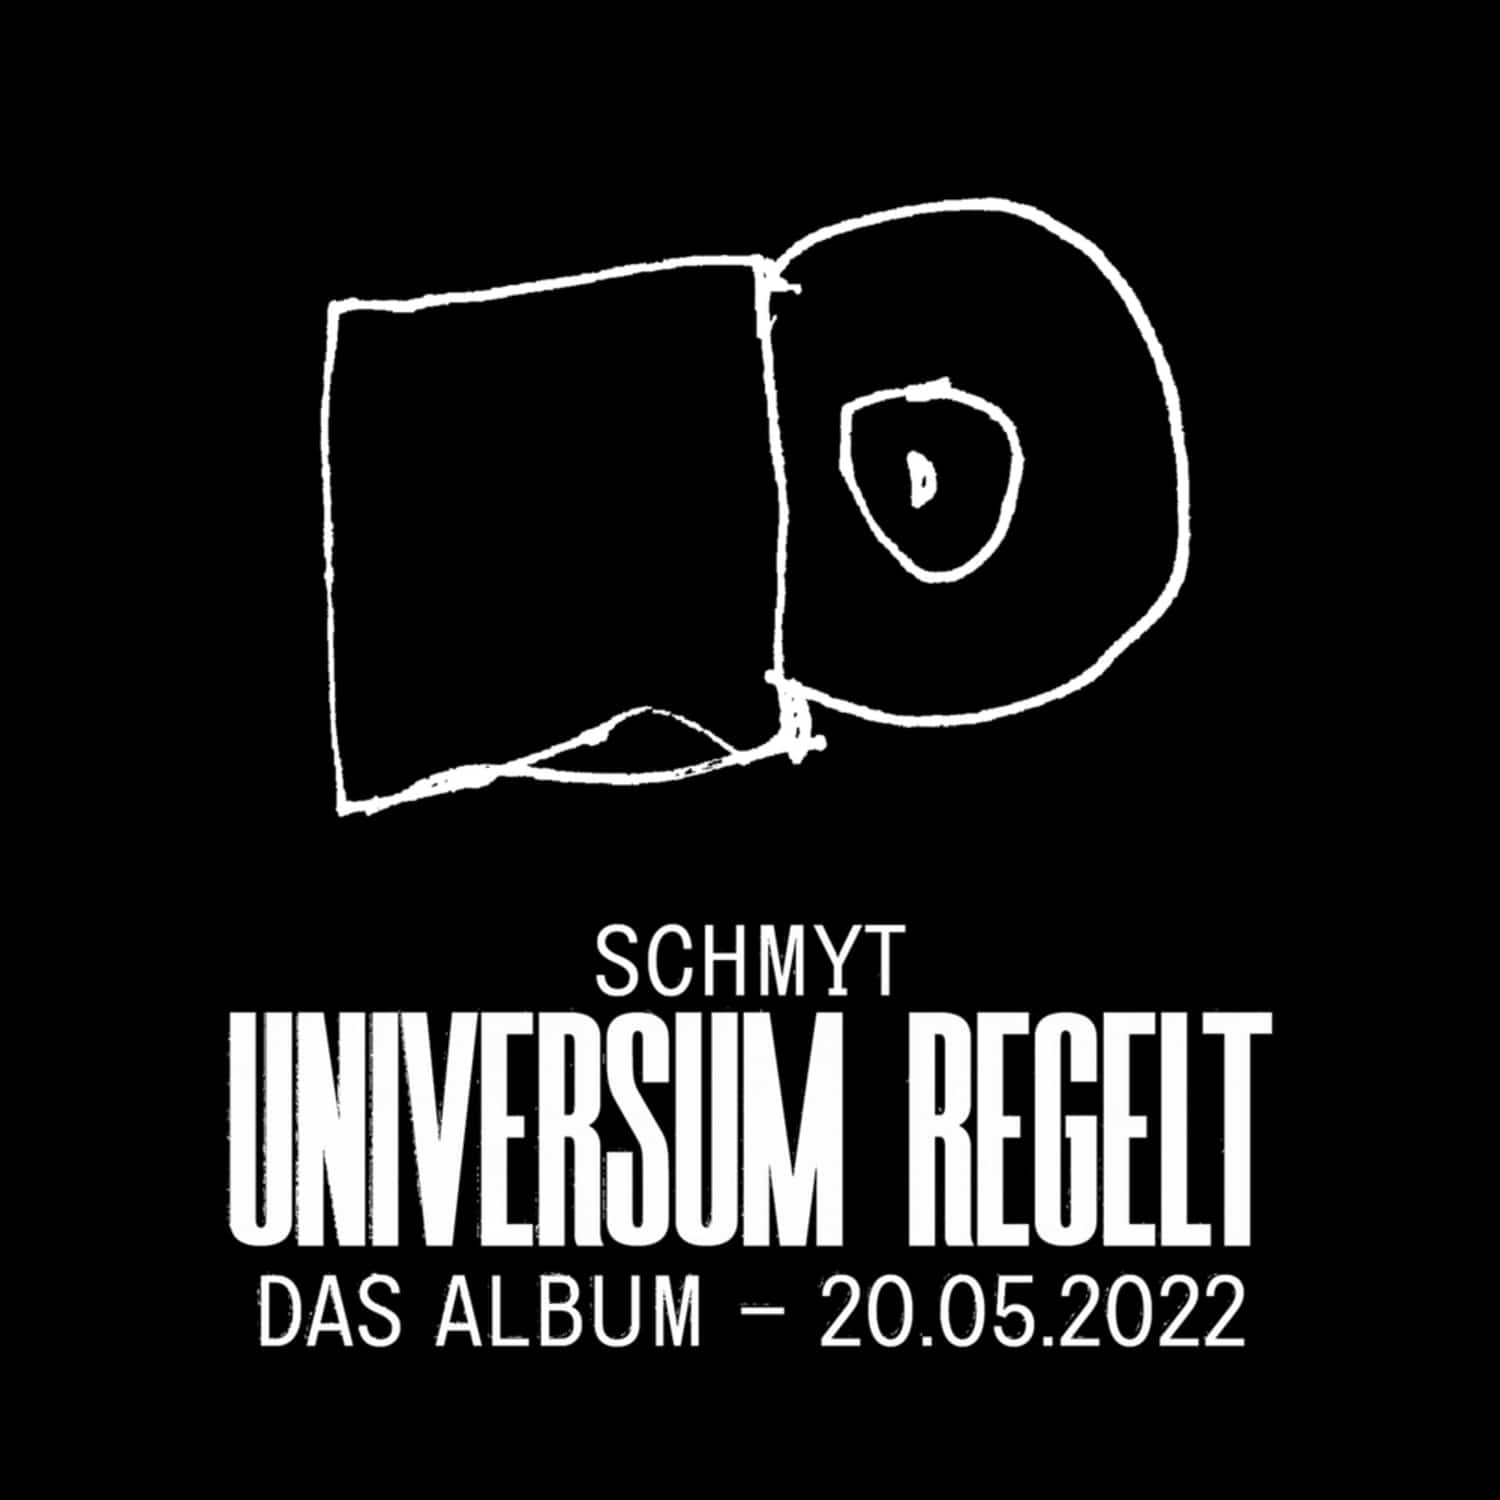 Schmyt - UNIVERSUM REGELT